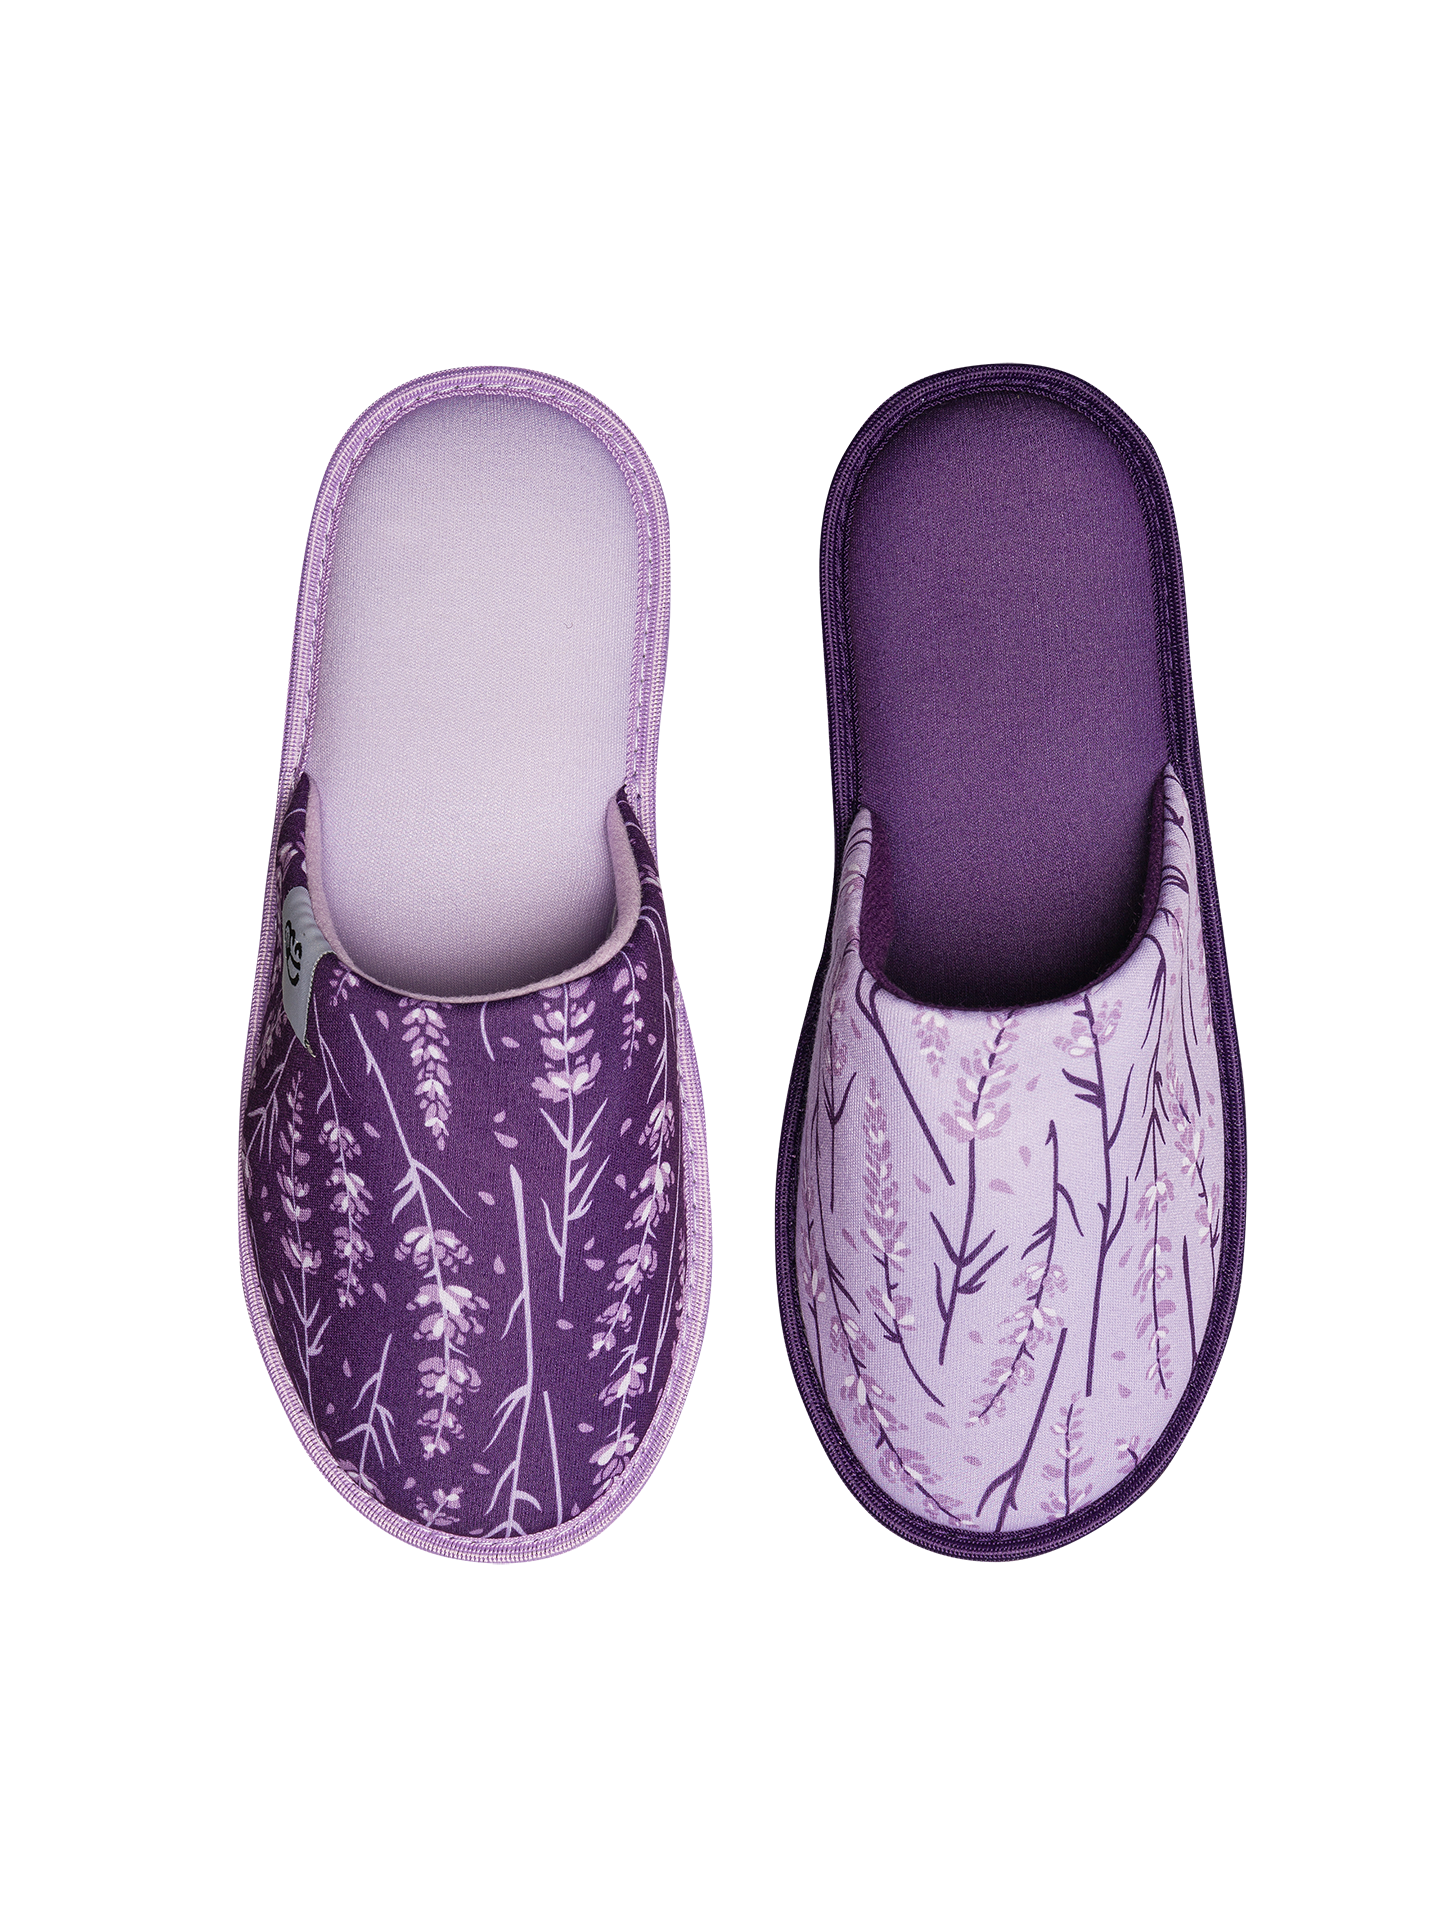 Slippers Lavender